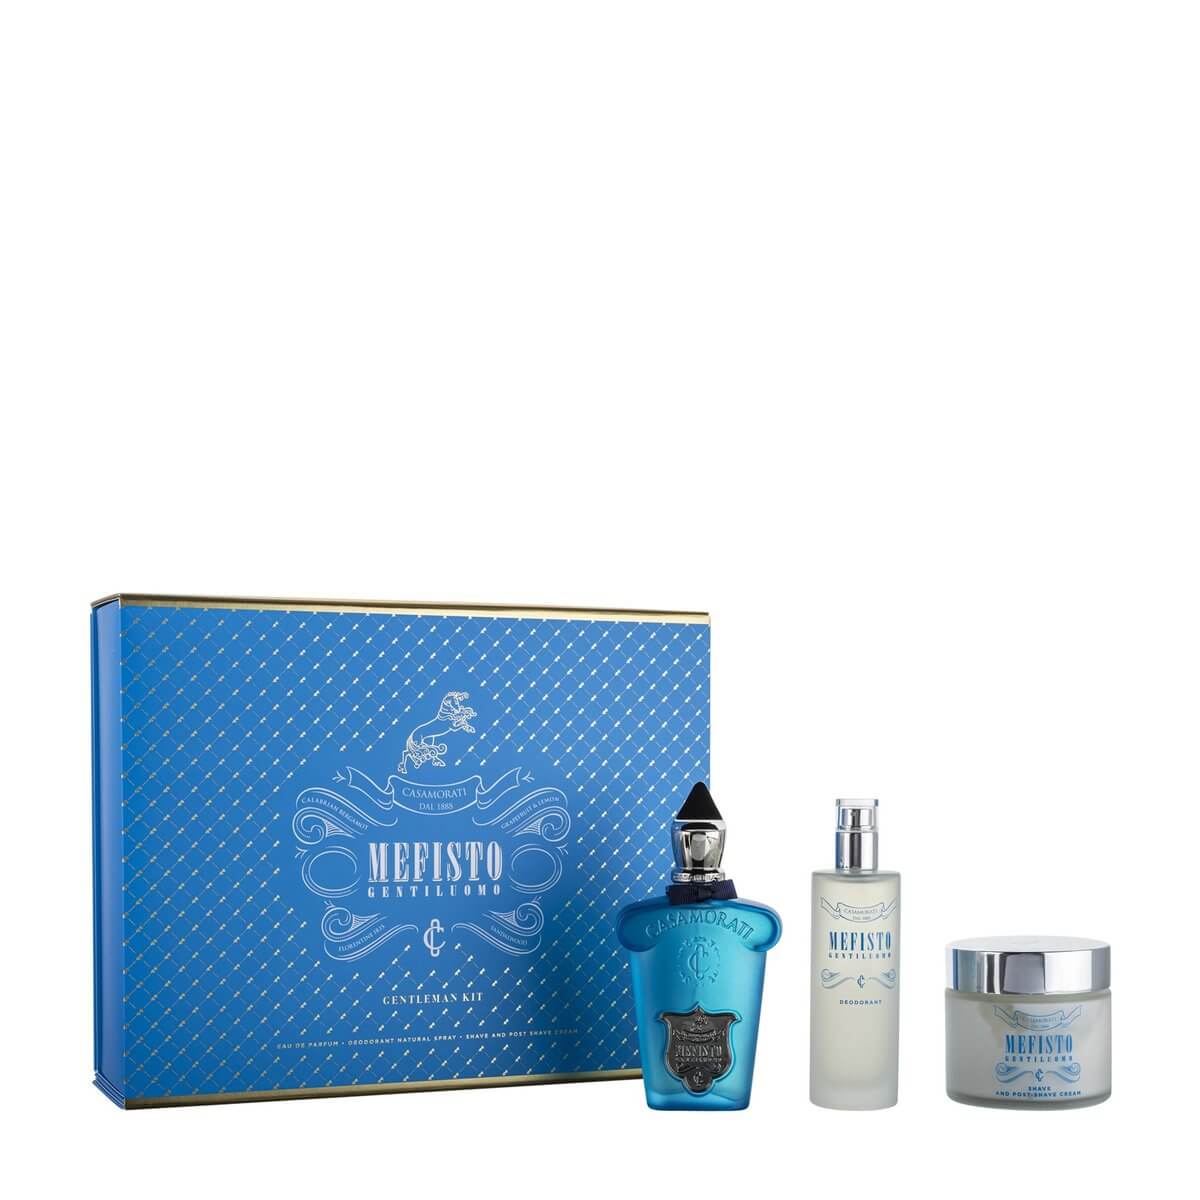 Xerjoff - Casamorati 1888 Mefisto Gentil Uomo Gift Set edp 100ml + Deodorant 100ml+Shave Cream 200ml